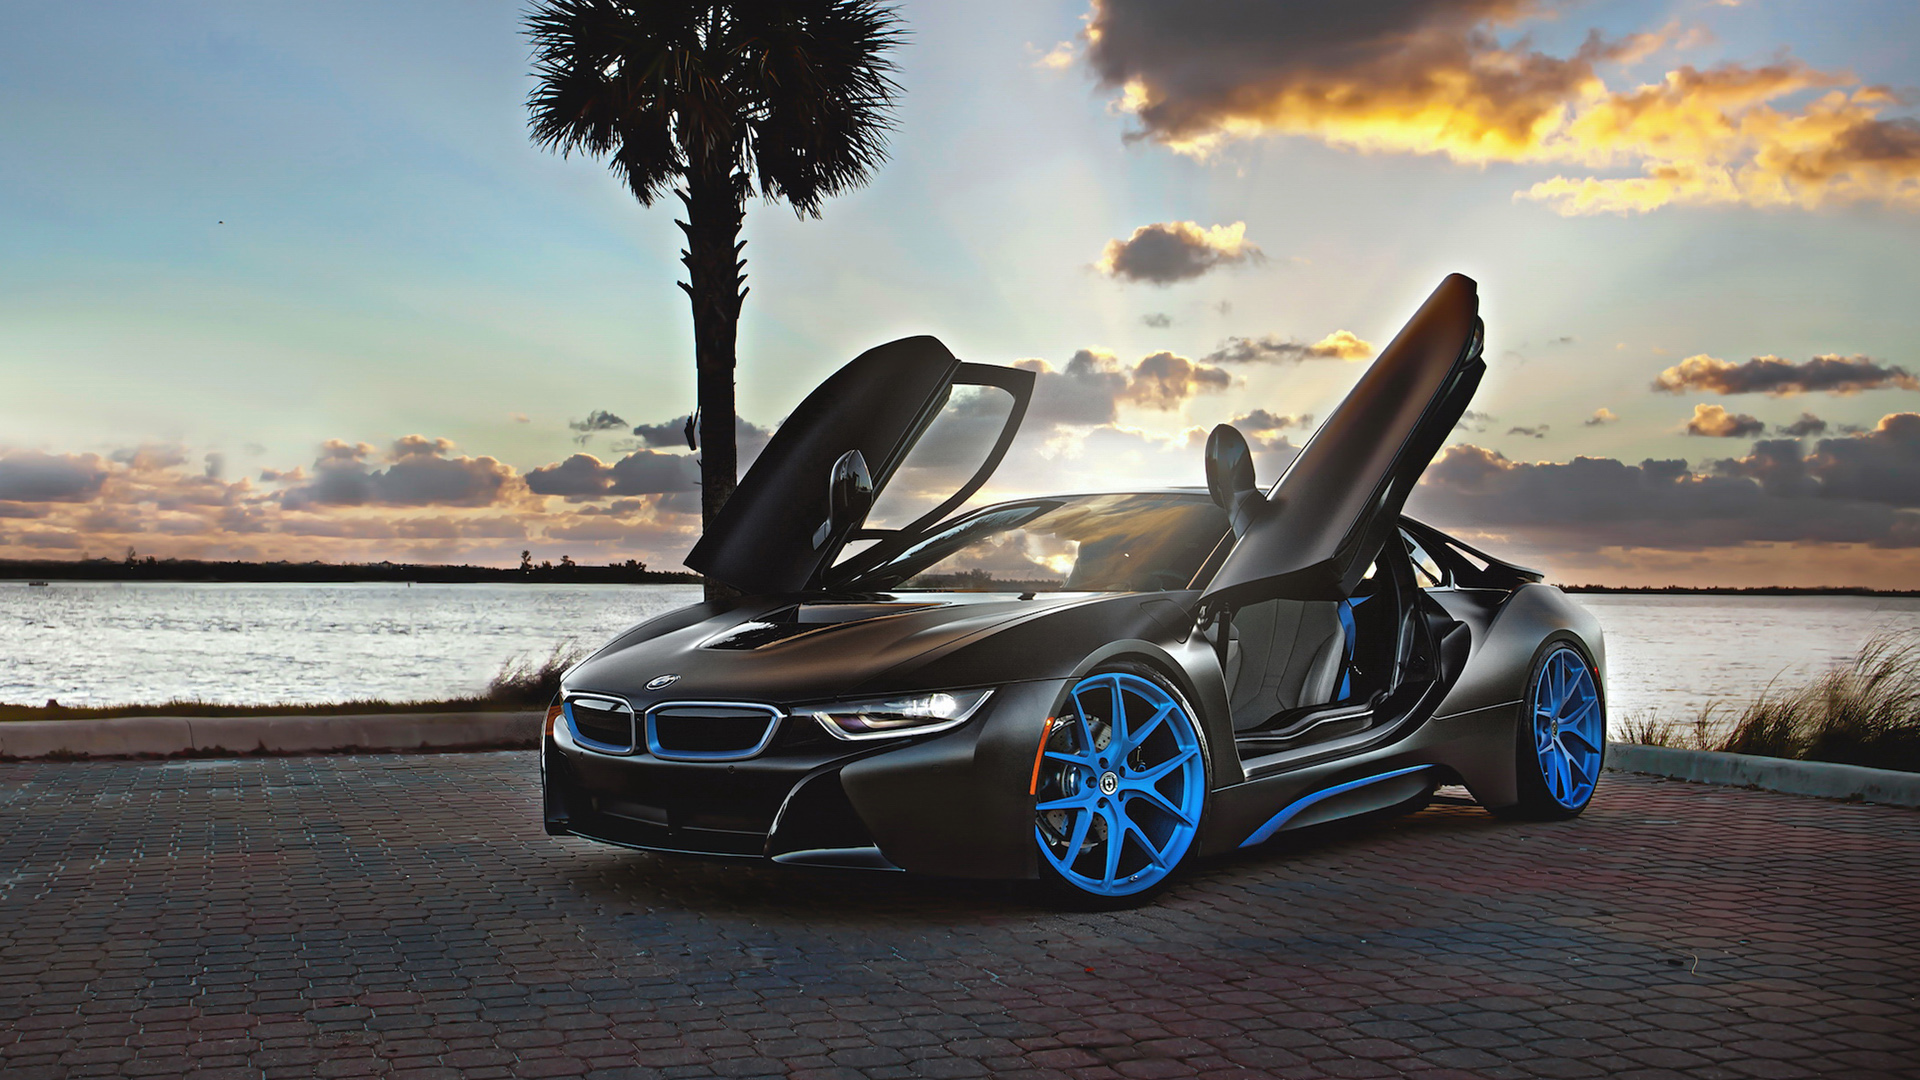 BMW i8 Blue HRE Wheels Wallpaper | HD Car Wallpapers | ID #5189